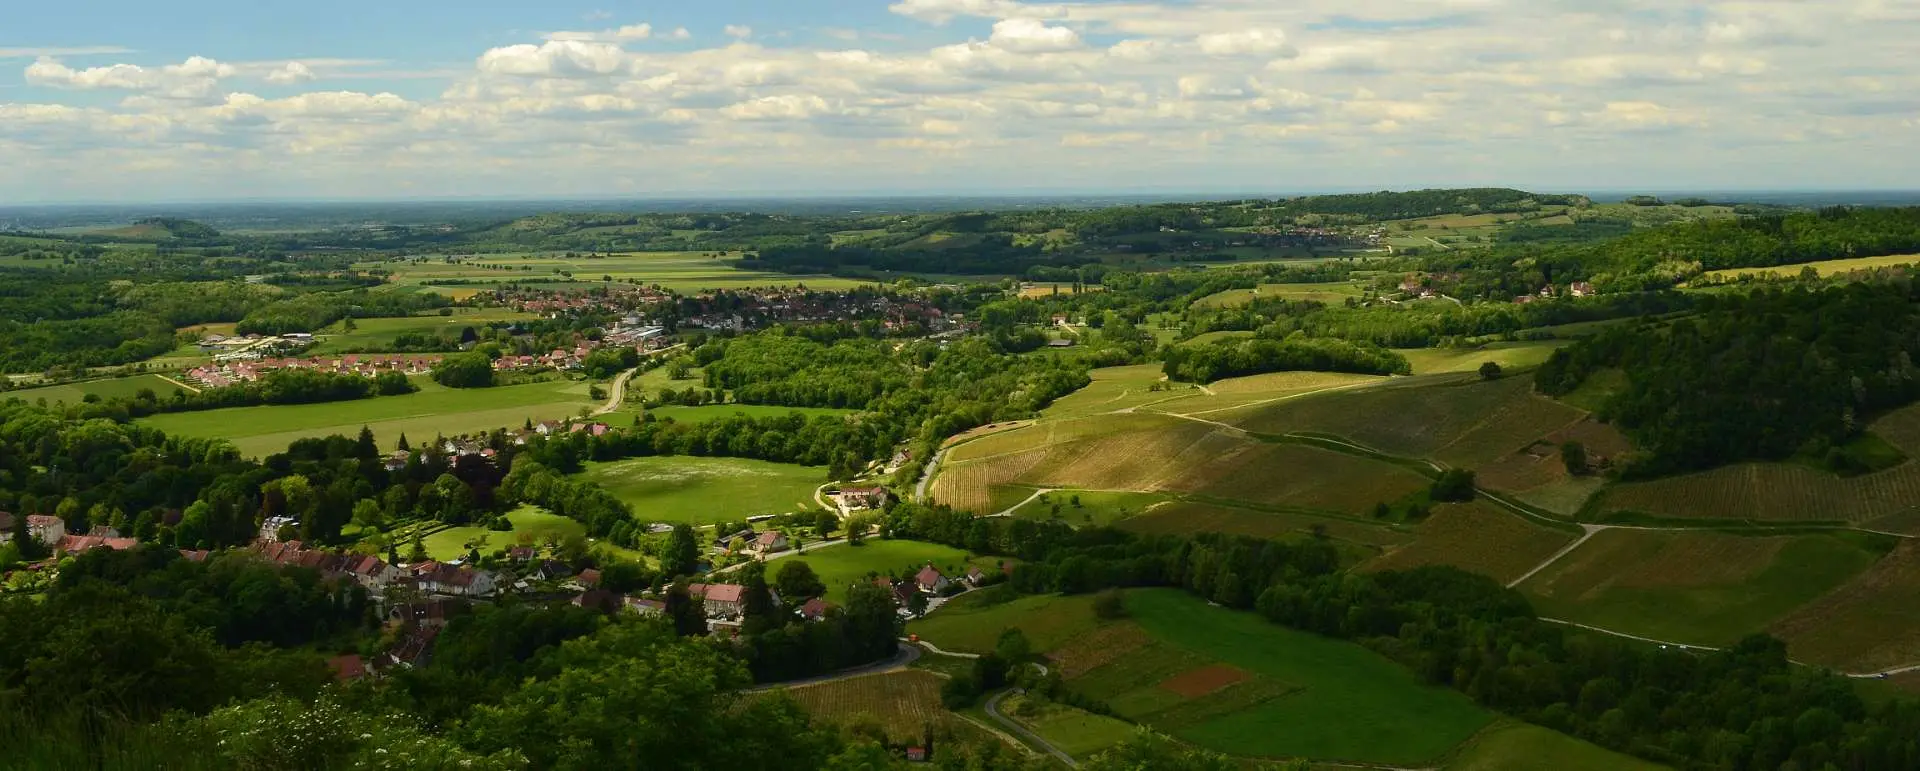 Bourgogne-Franche-Comté - the destination with youth hostels